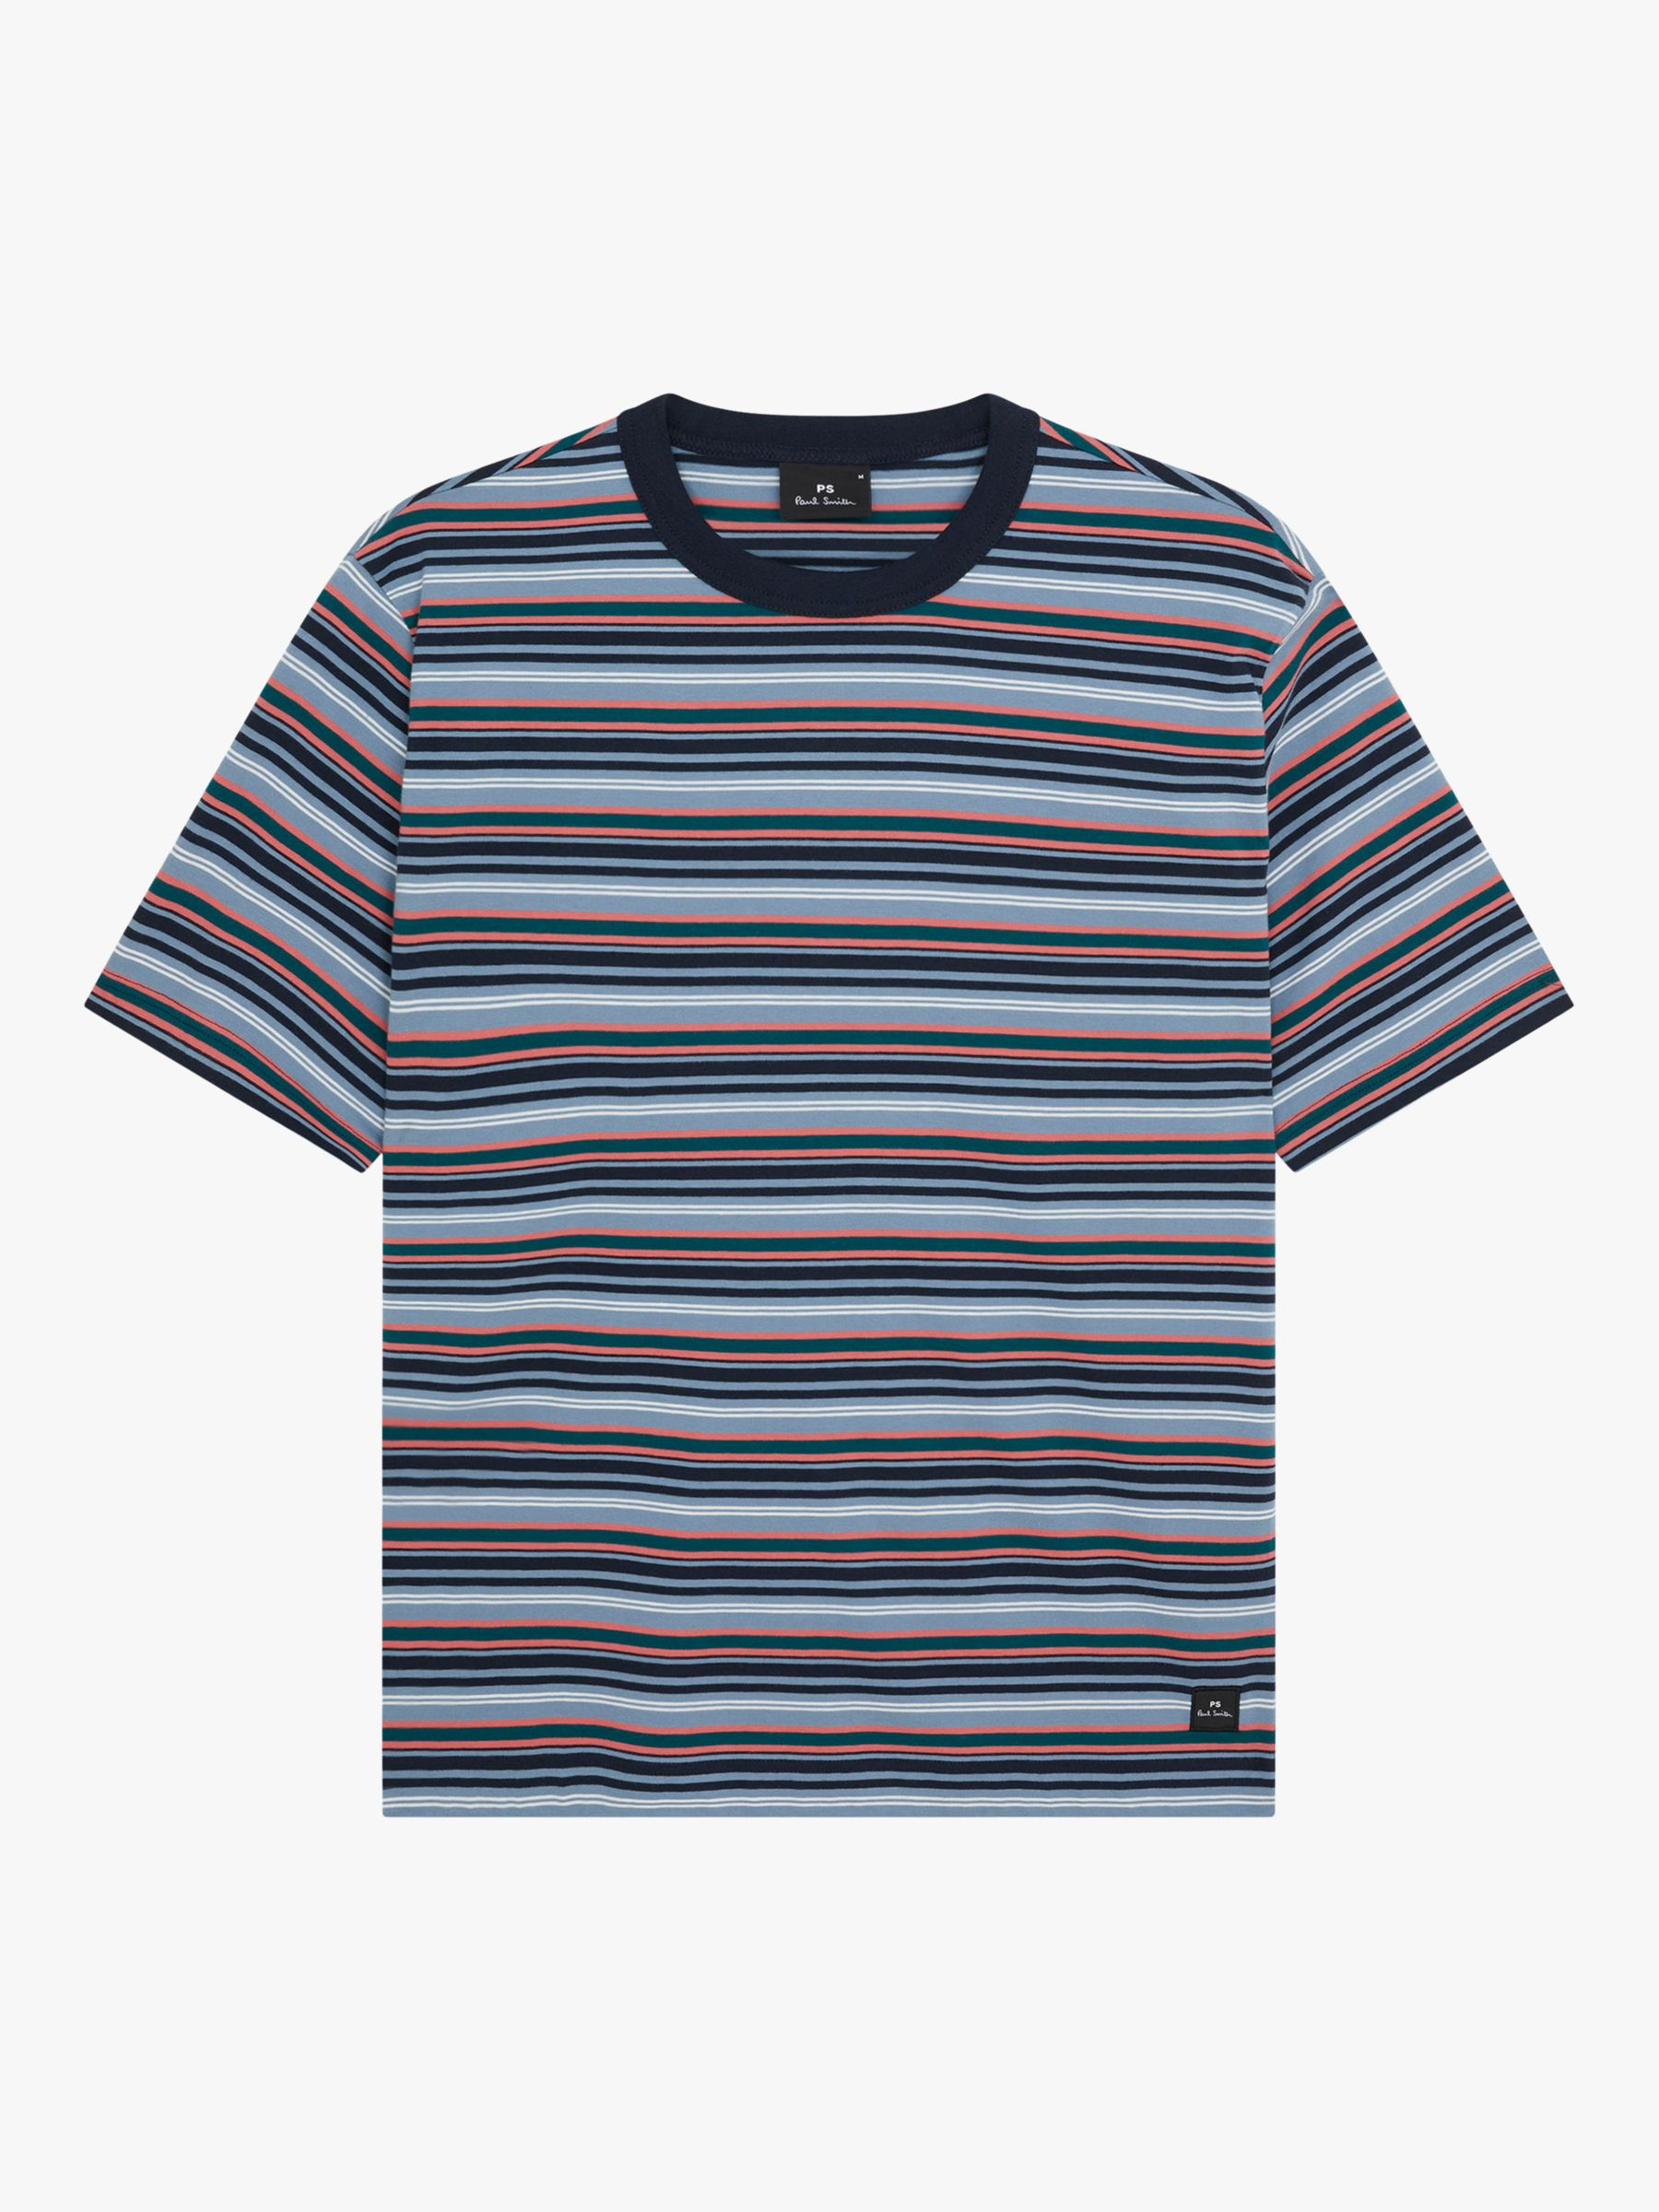 Paul Smith Organic Cotton Short Sleeve Stripe T-Shirt, Blue/Multi, S